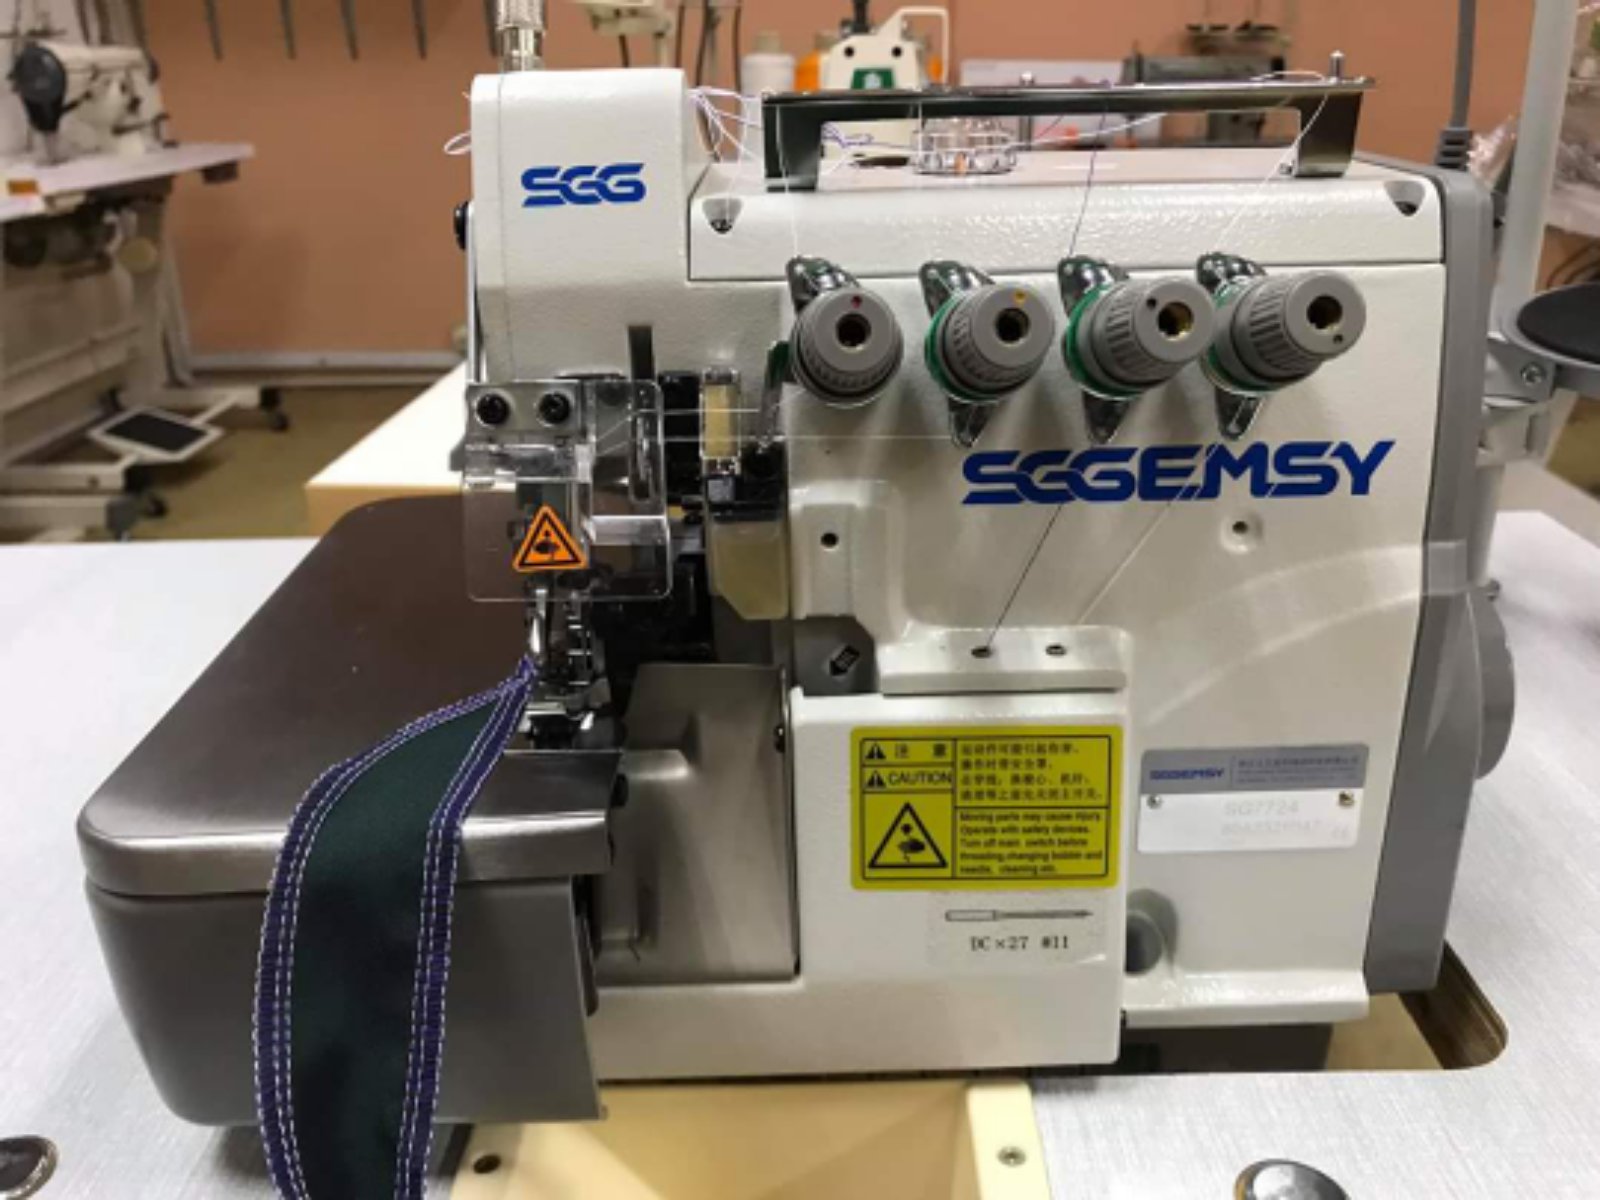 SGGemsy Overlock Sewing Machine 